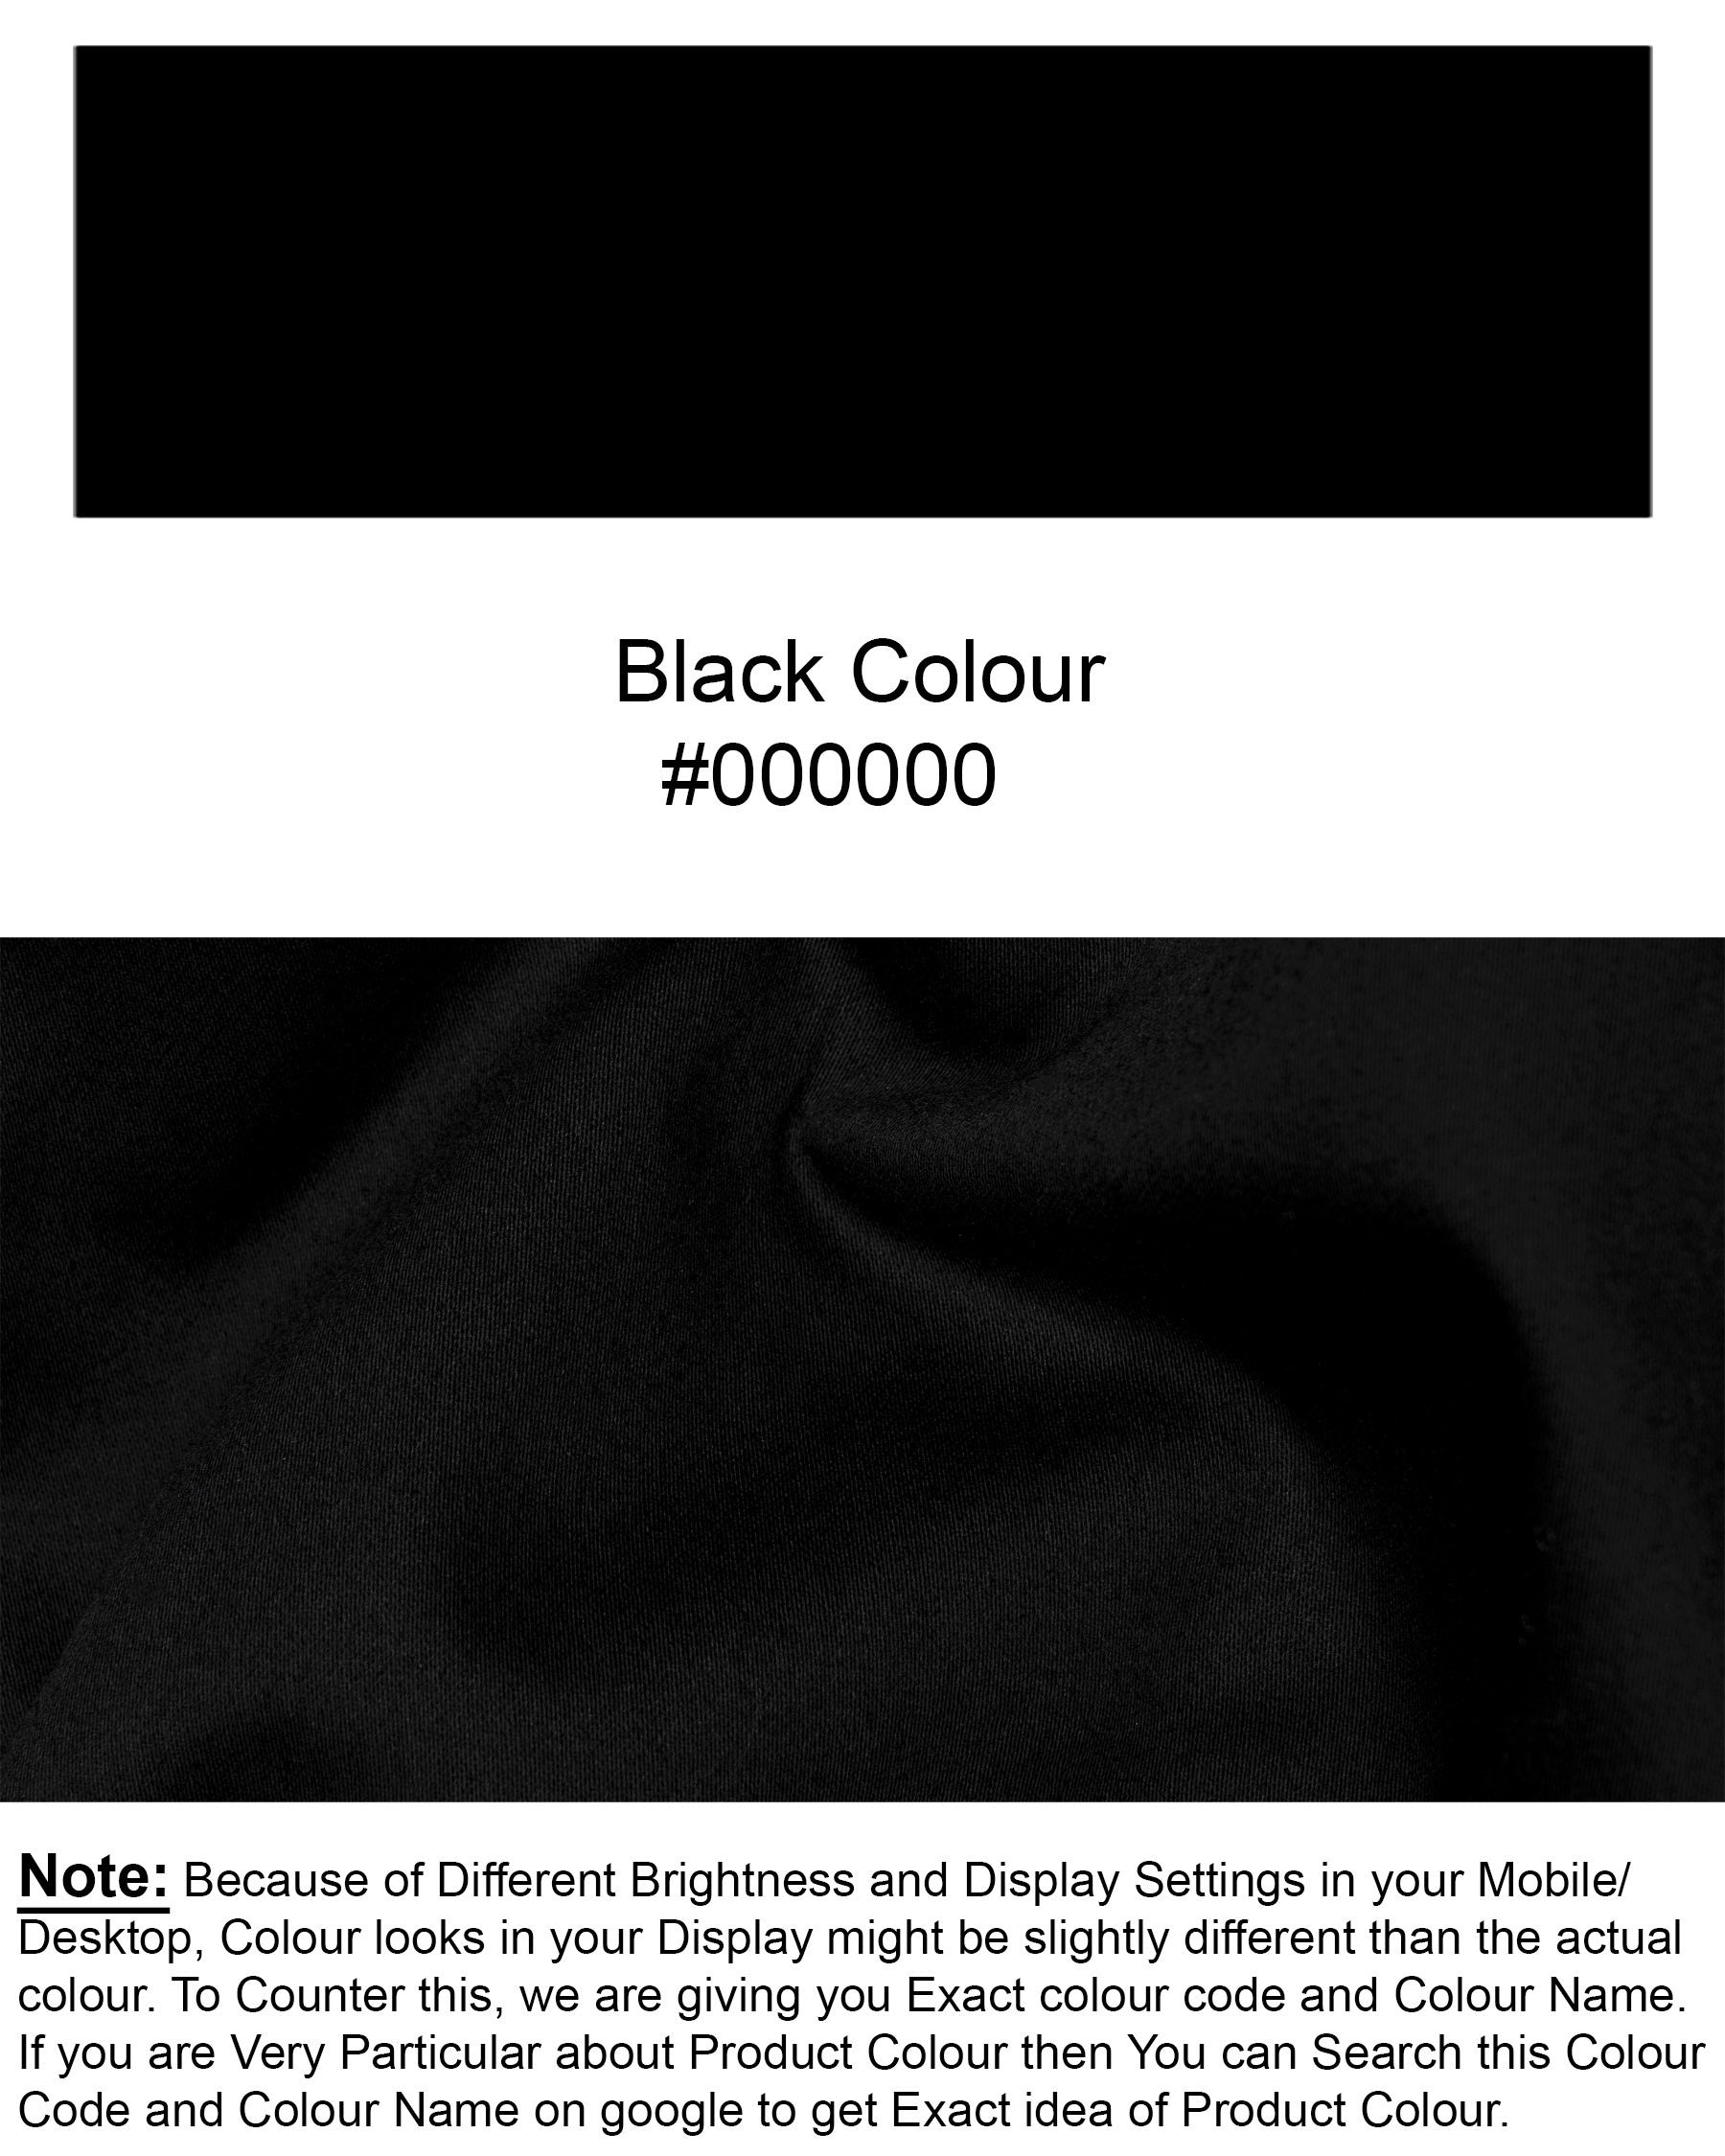 Jade Black With horizontal stitches Bandhgala Designer Blazer BL1812-BG-D168-36, BL1812-BG-D168-38, BL1812-BG-D168-40, BL1812-BG-D168-42, BL1812-BG-D168-44, BL1812-BG-D168-46, BL1812-BG-D168-48, BL1812-BG-D168-50, BL1812-BG-D168-52, BL1812-BG-D168-54, BL1812-BG-D168-56, BL1812-BG-D168-58, BL1812-BG-D168-60